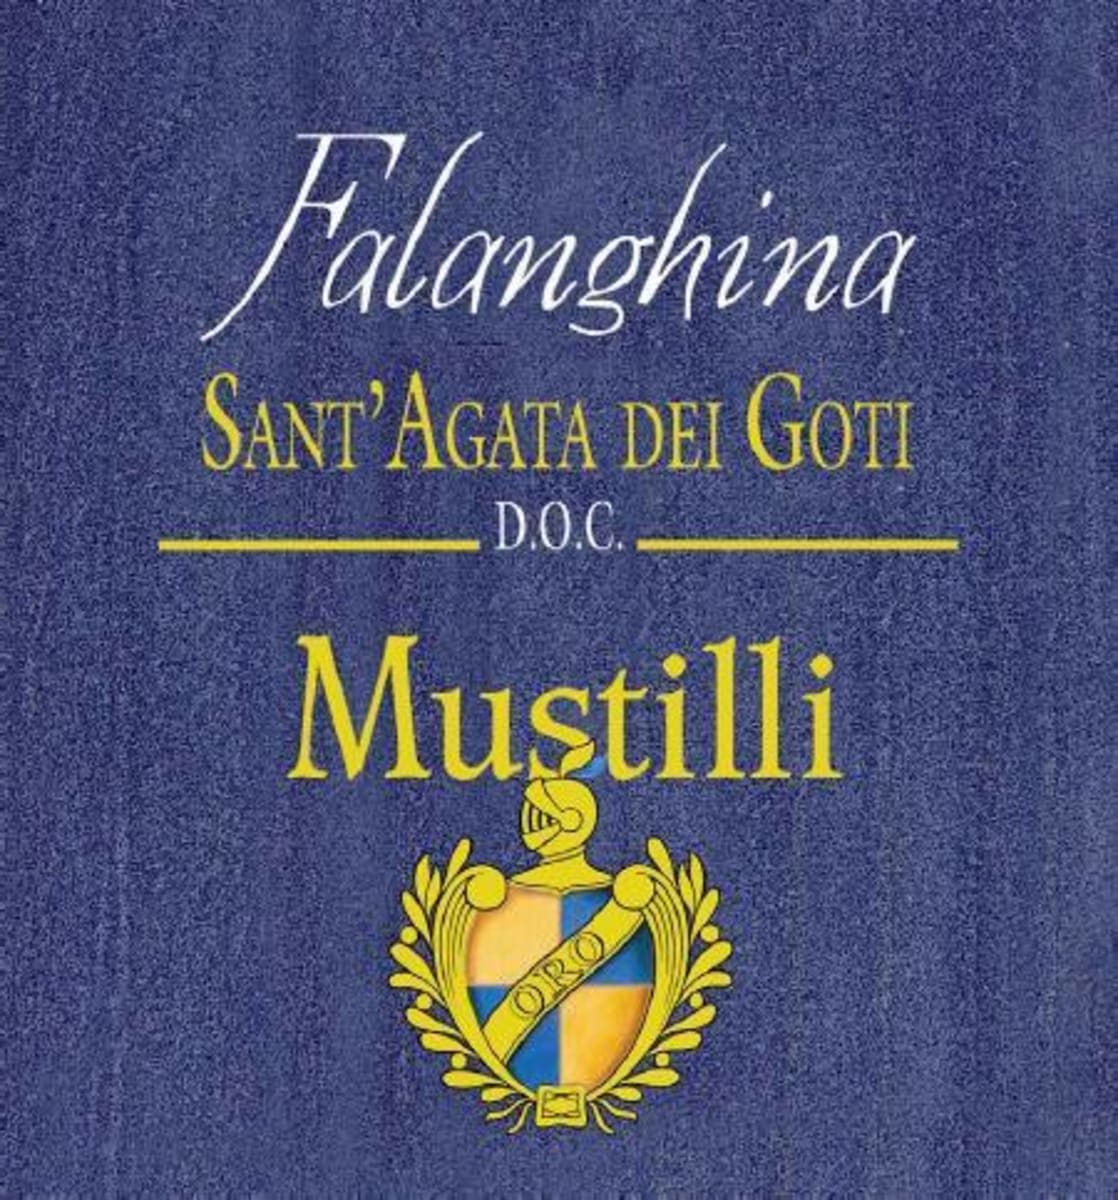 Mustilli Sant'Agata dei Goti Falanghina 2015 Front Label